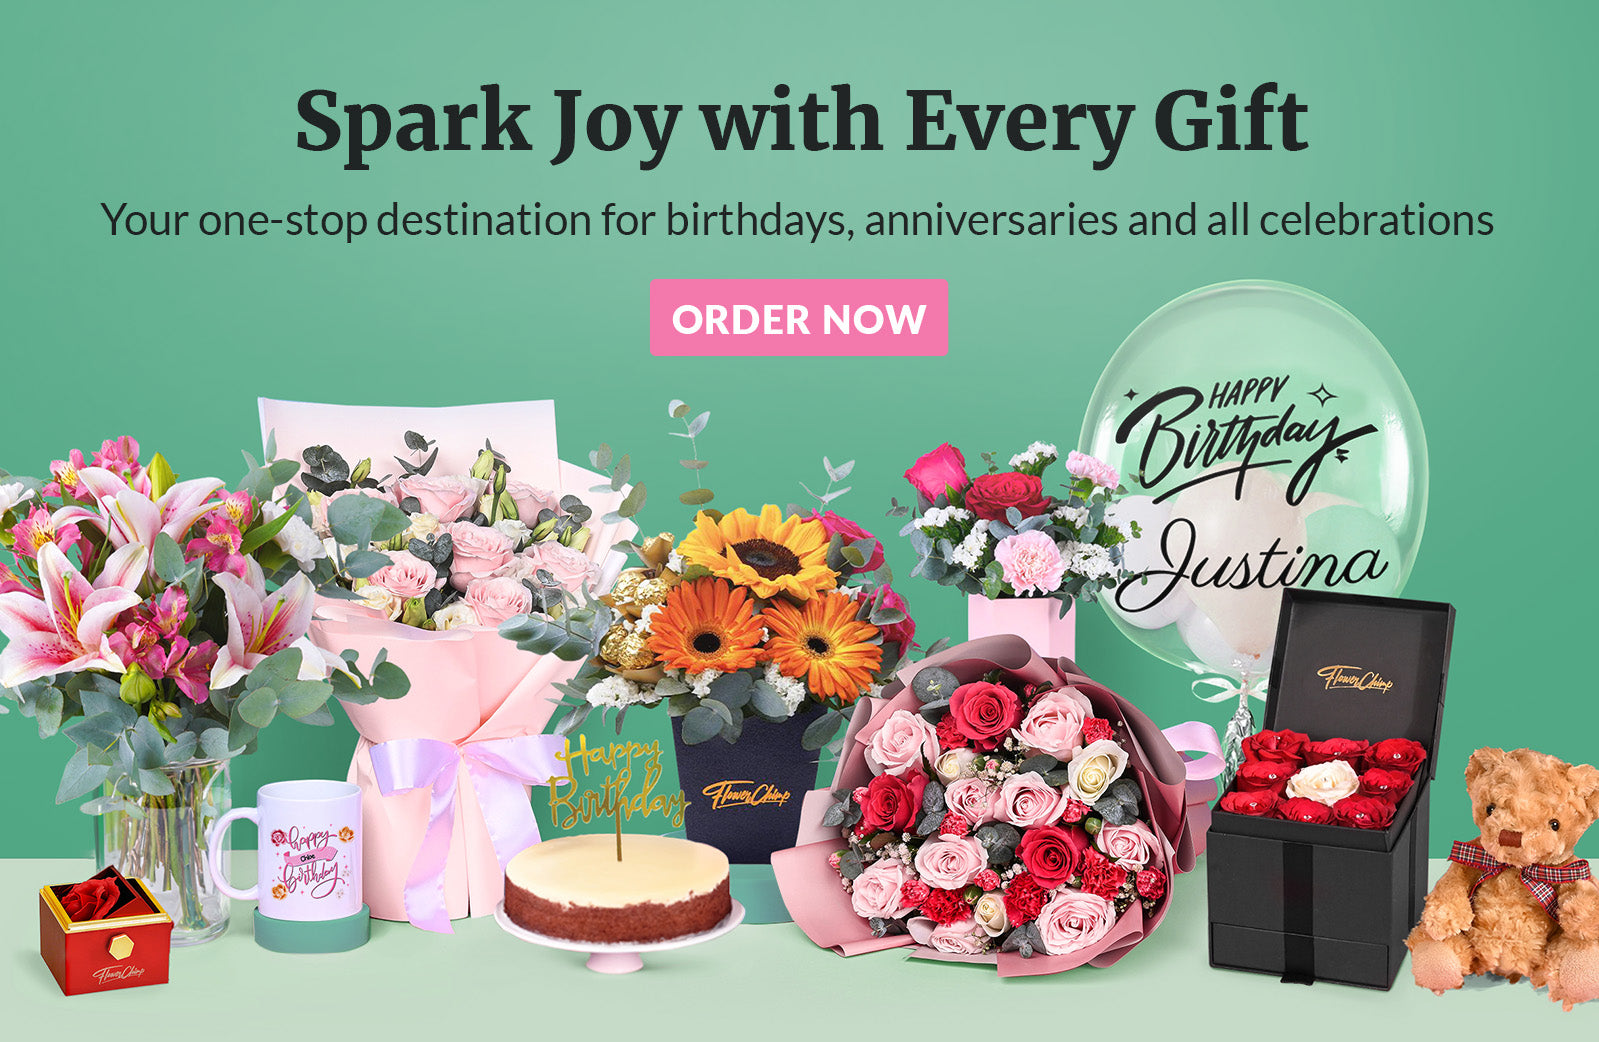 37+ Handmade Gift Ideas For Mom That She's Guaranteed To Love | Easy  handmade gifts, Homemade gifts for mom, Homemade birthday gifts